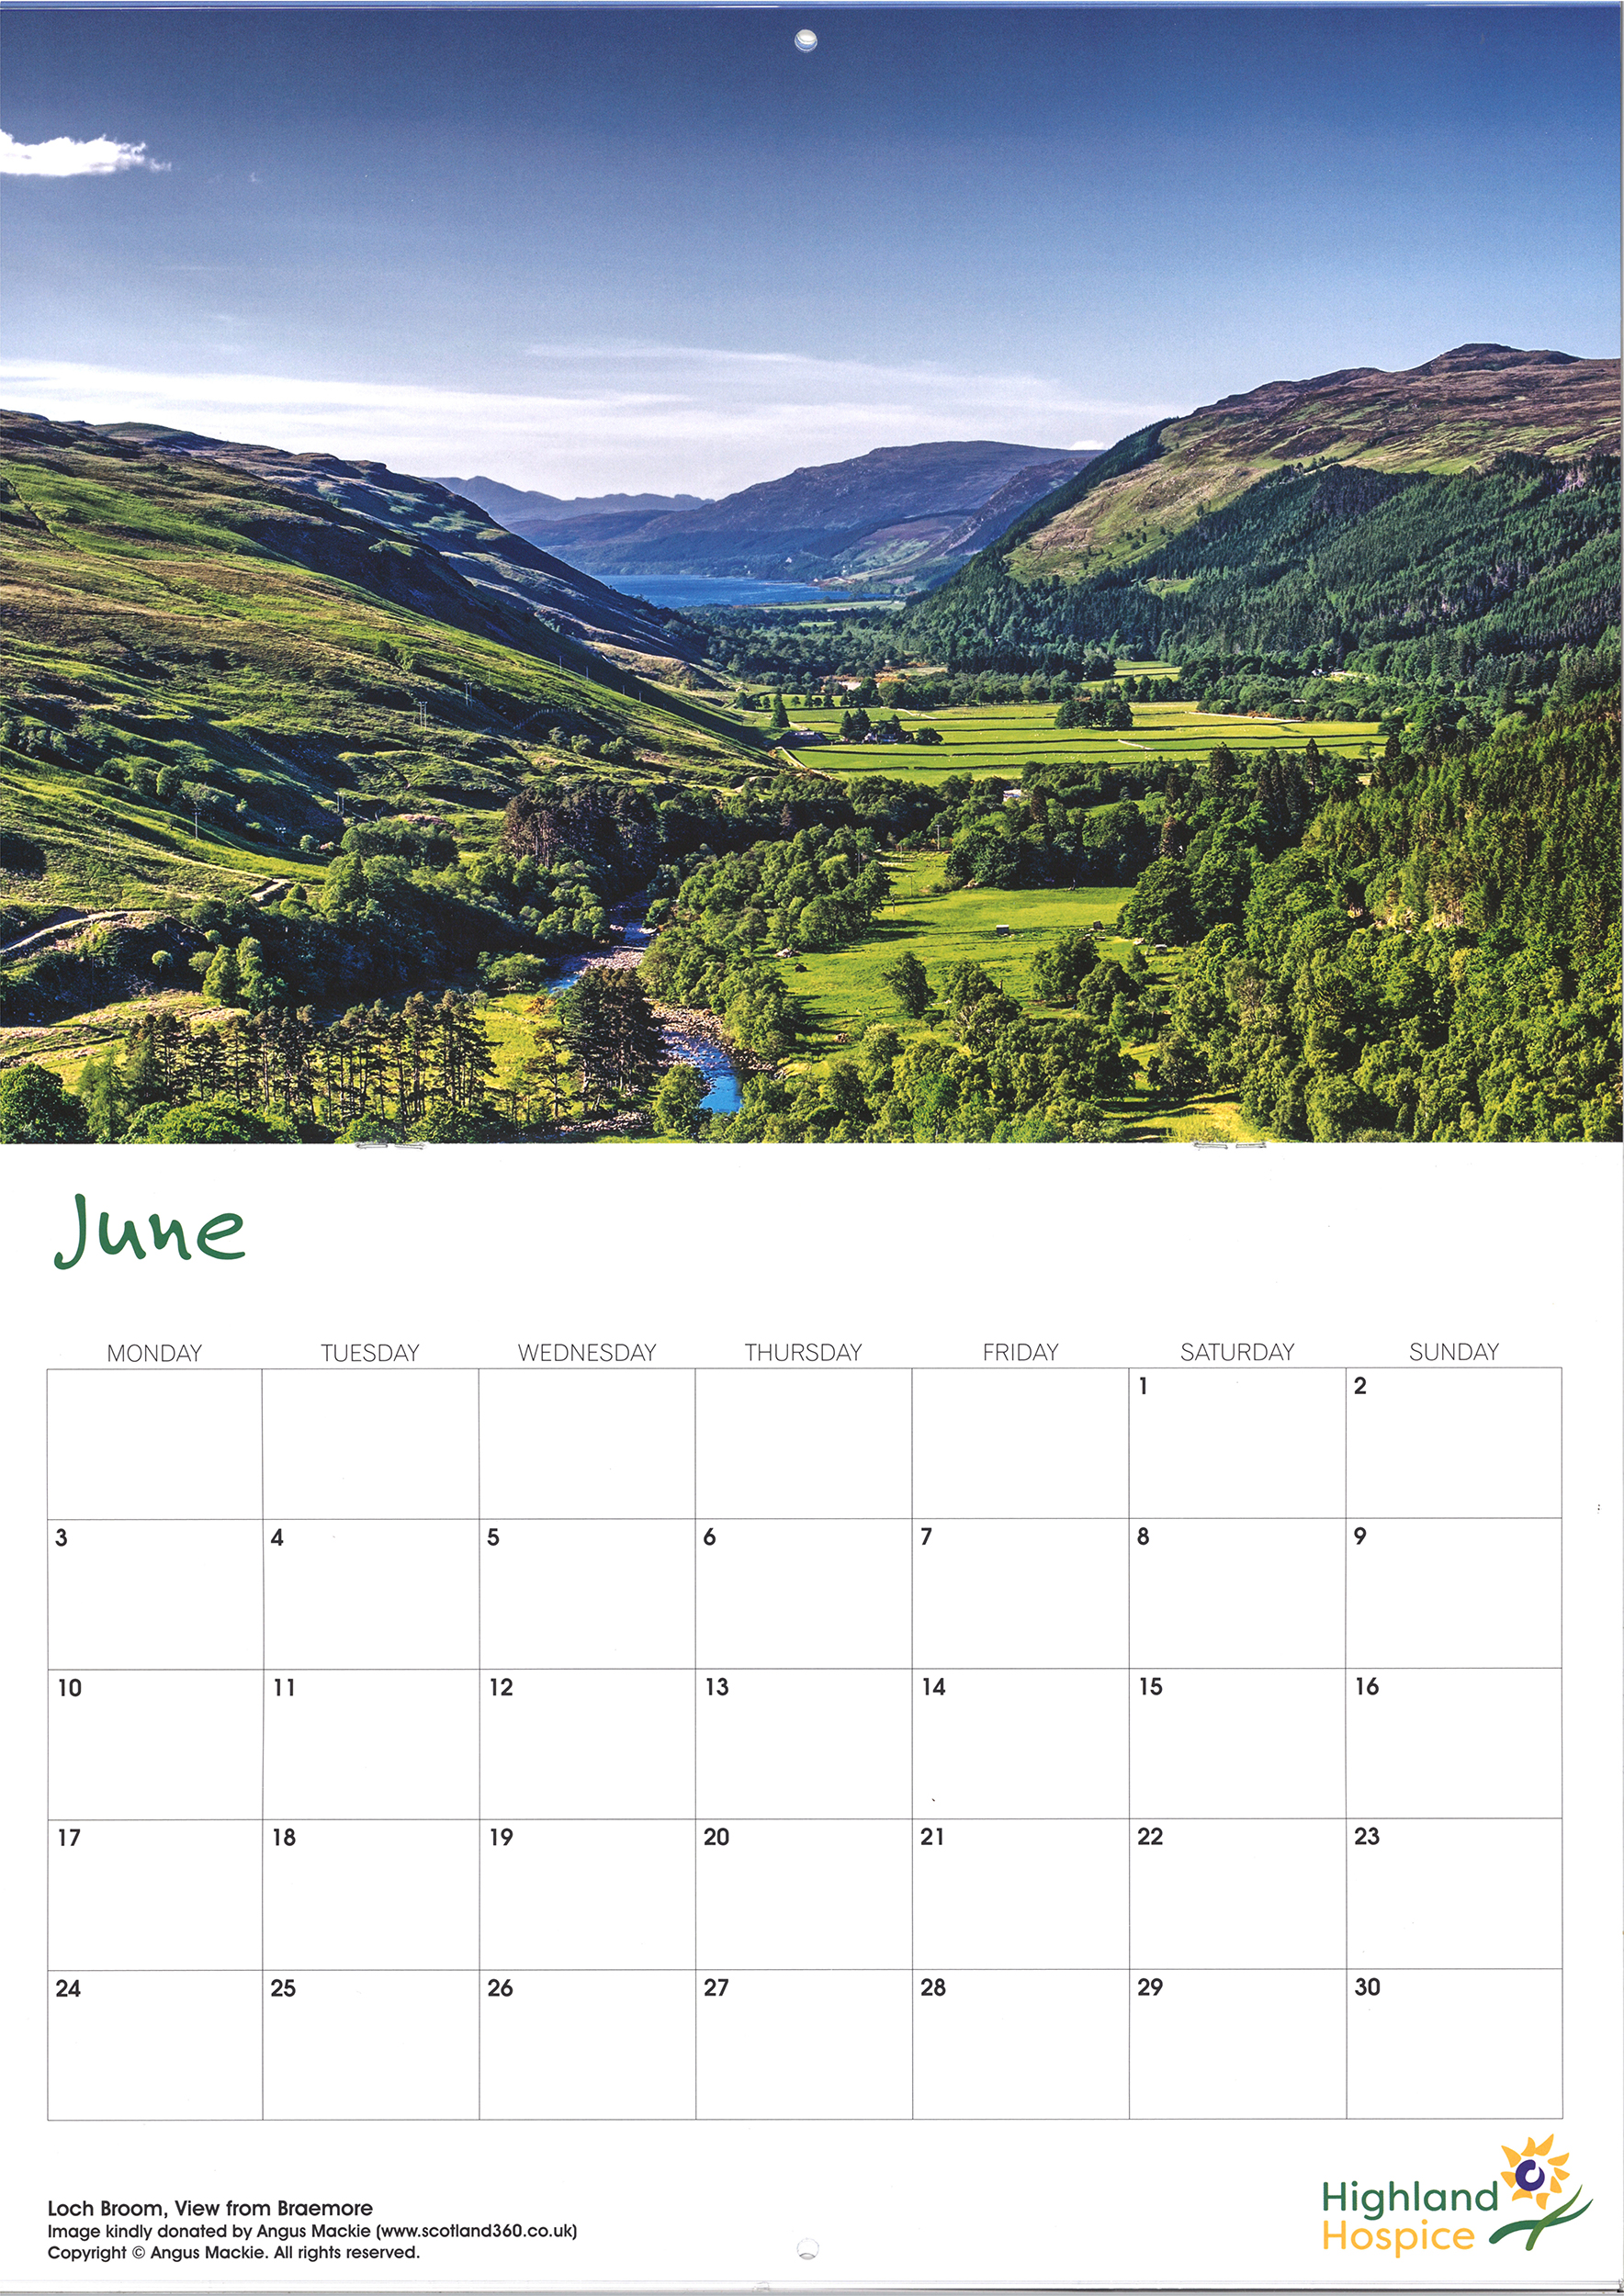 Highland Hospice 2019 Highland Scenes Calendar